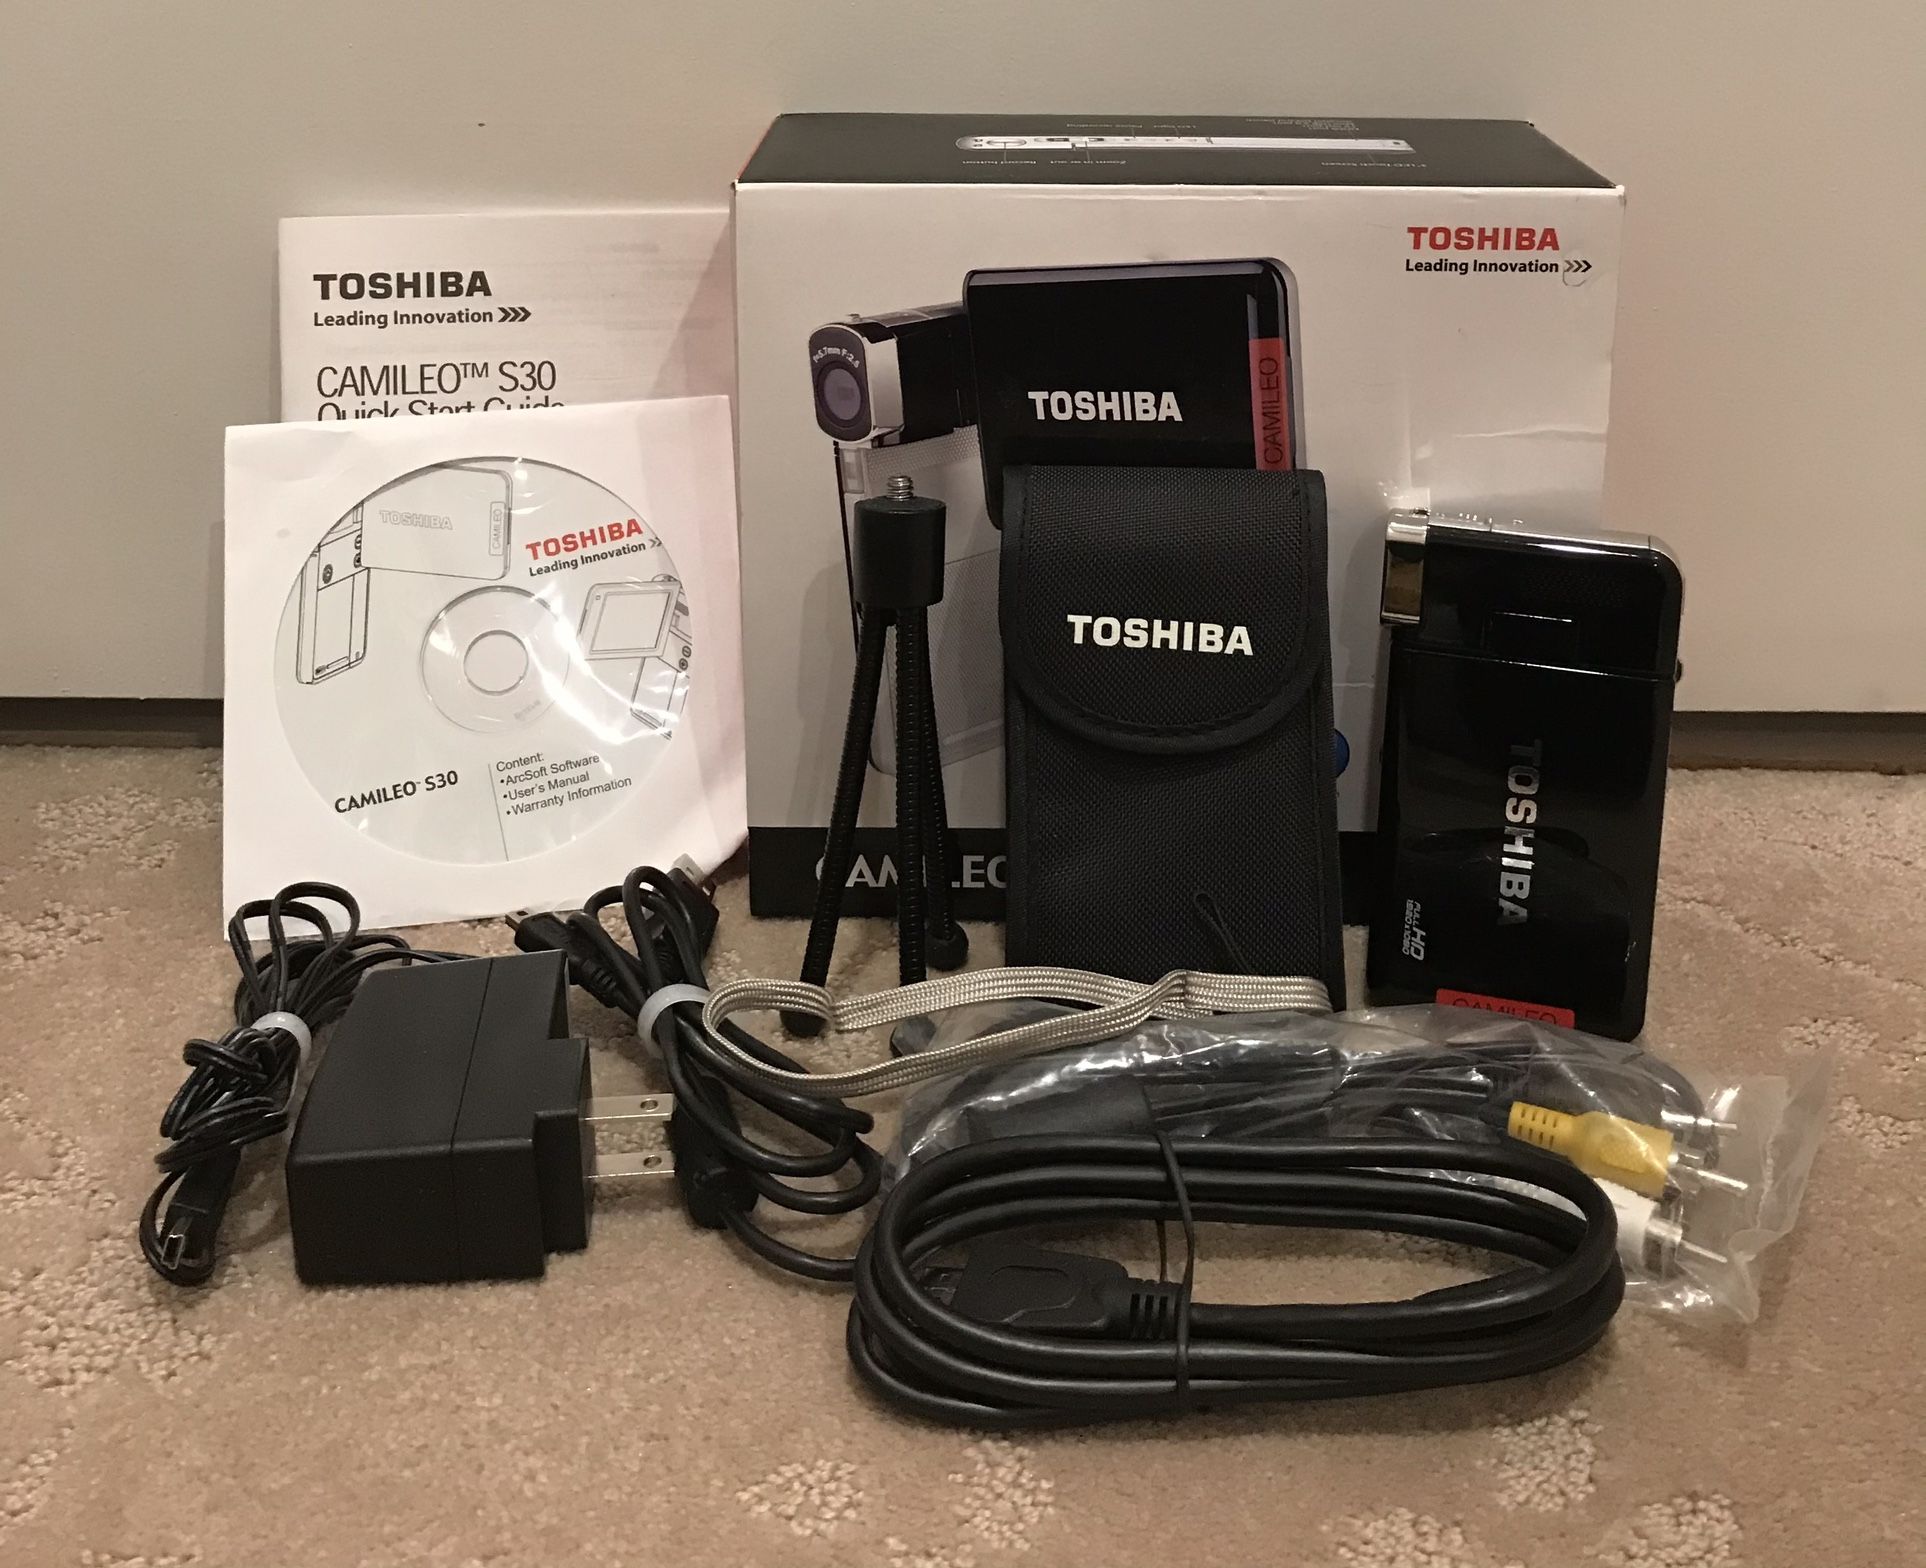 Toshiba Camileo S30 Camcorder and Accessories